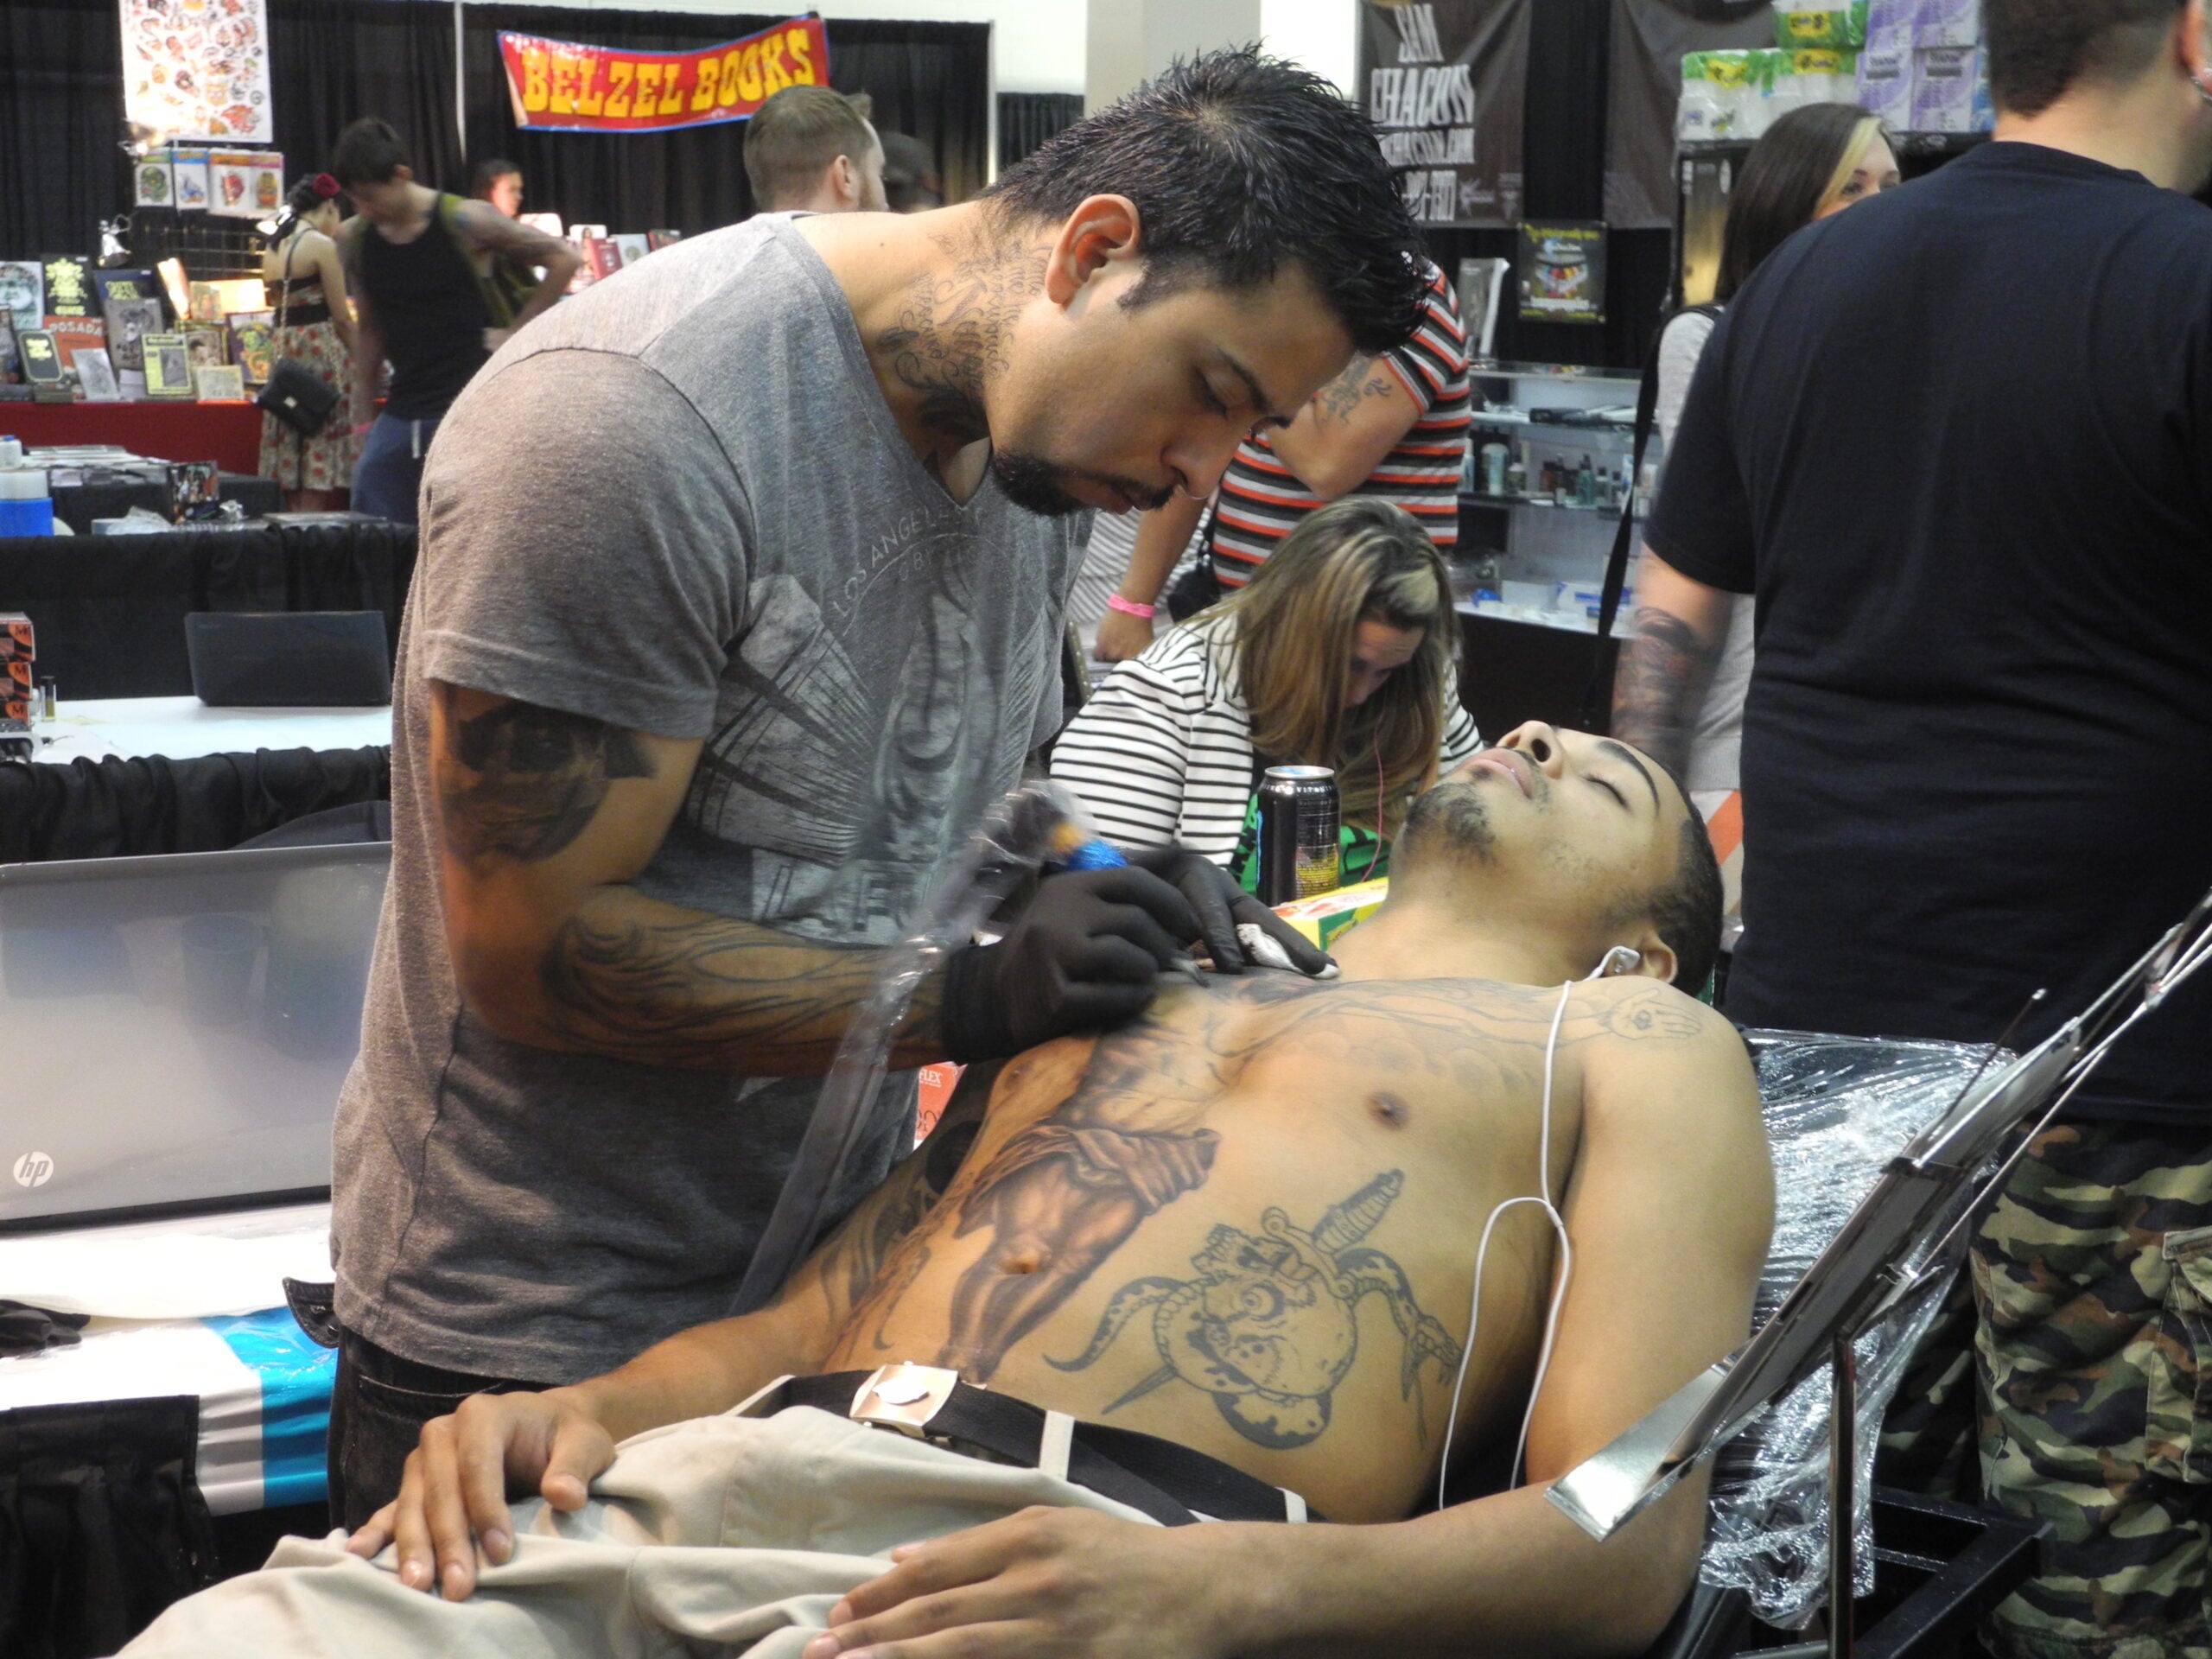 PHOTOS: Tattoo Convention